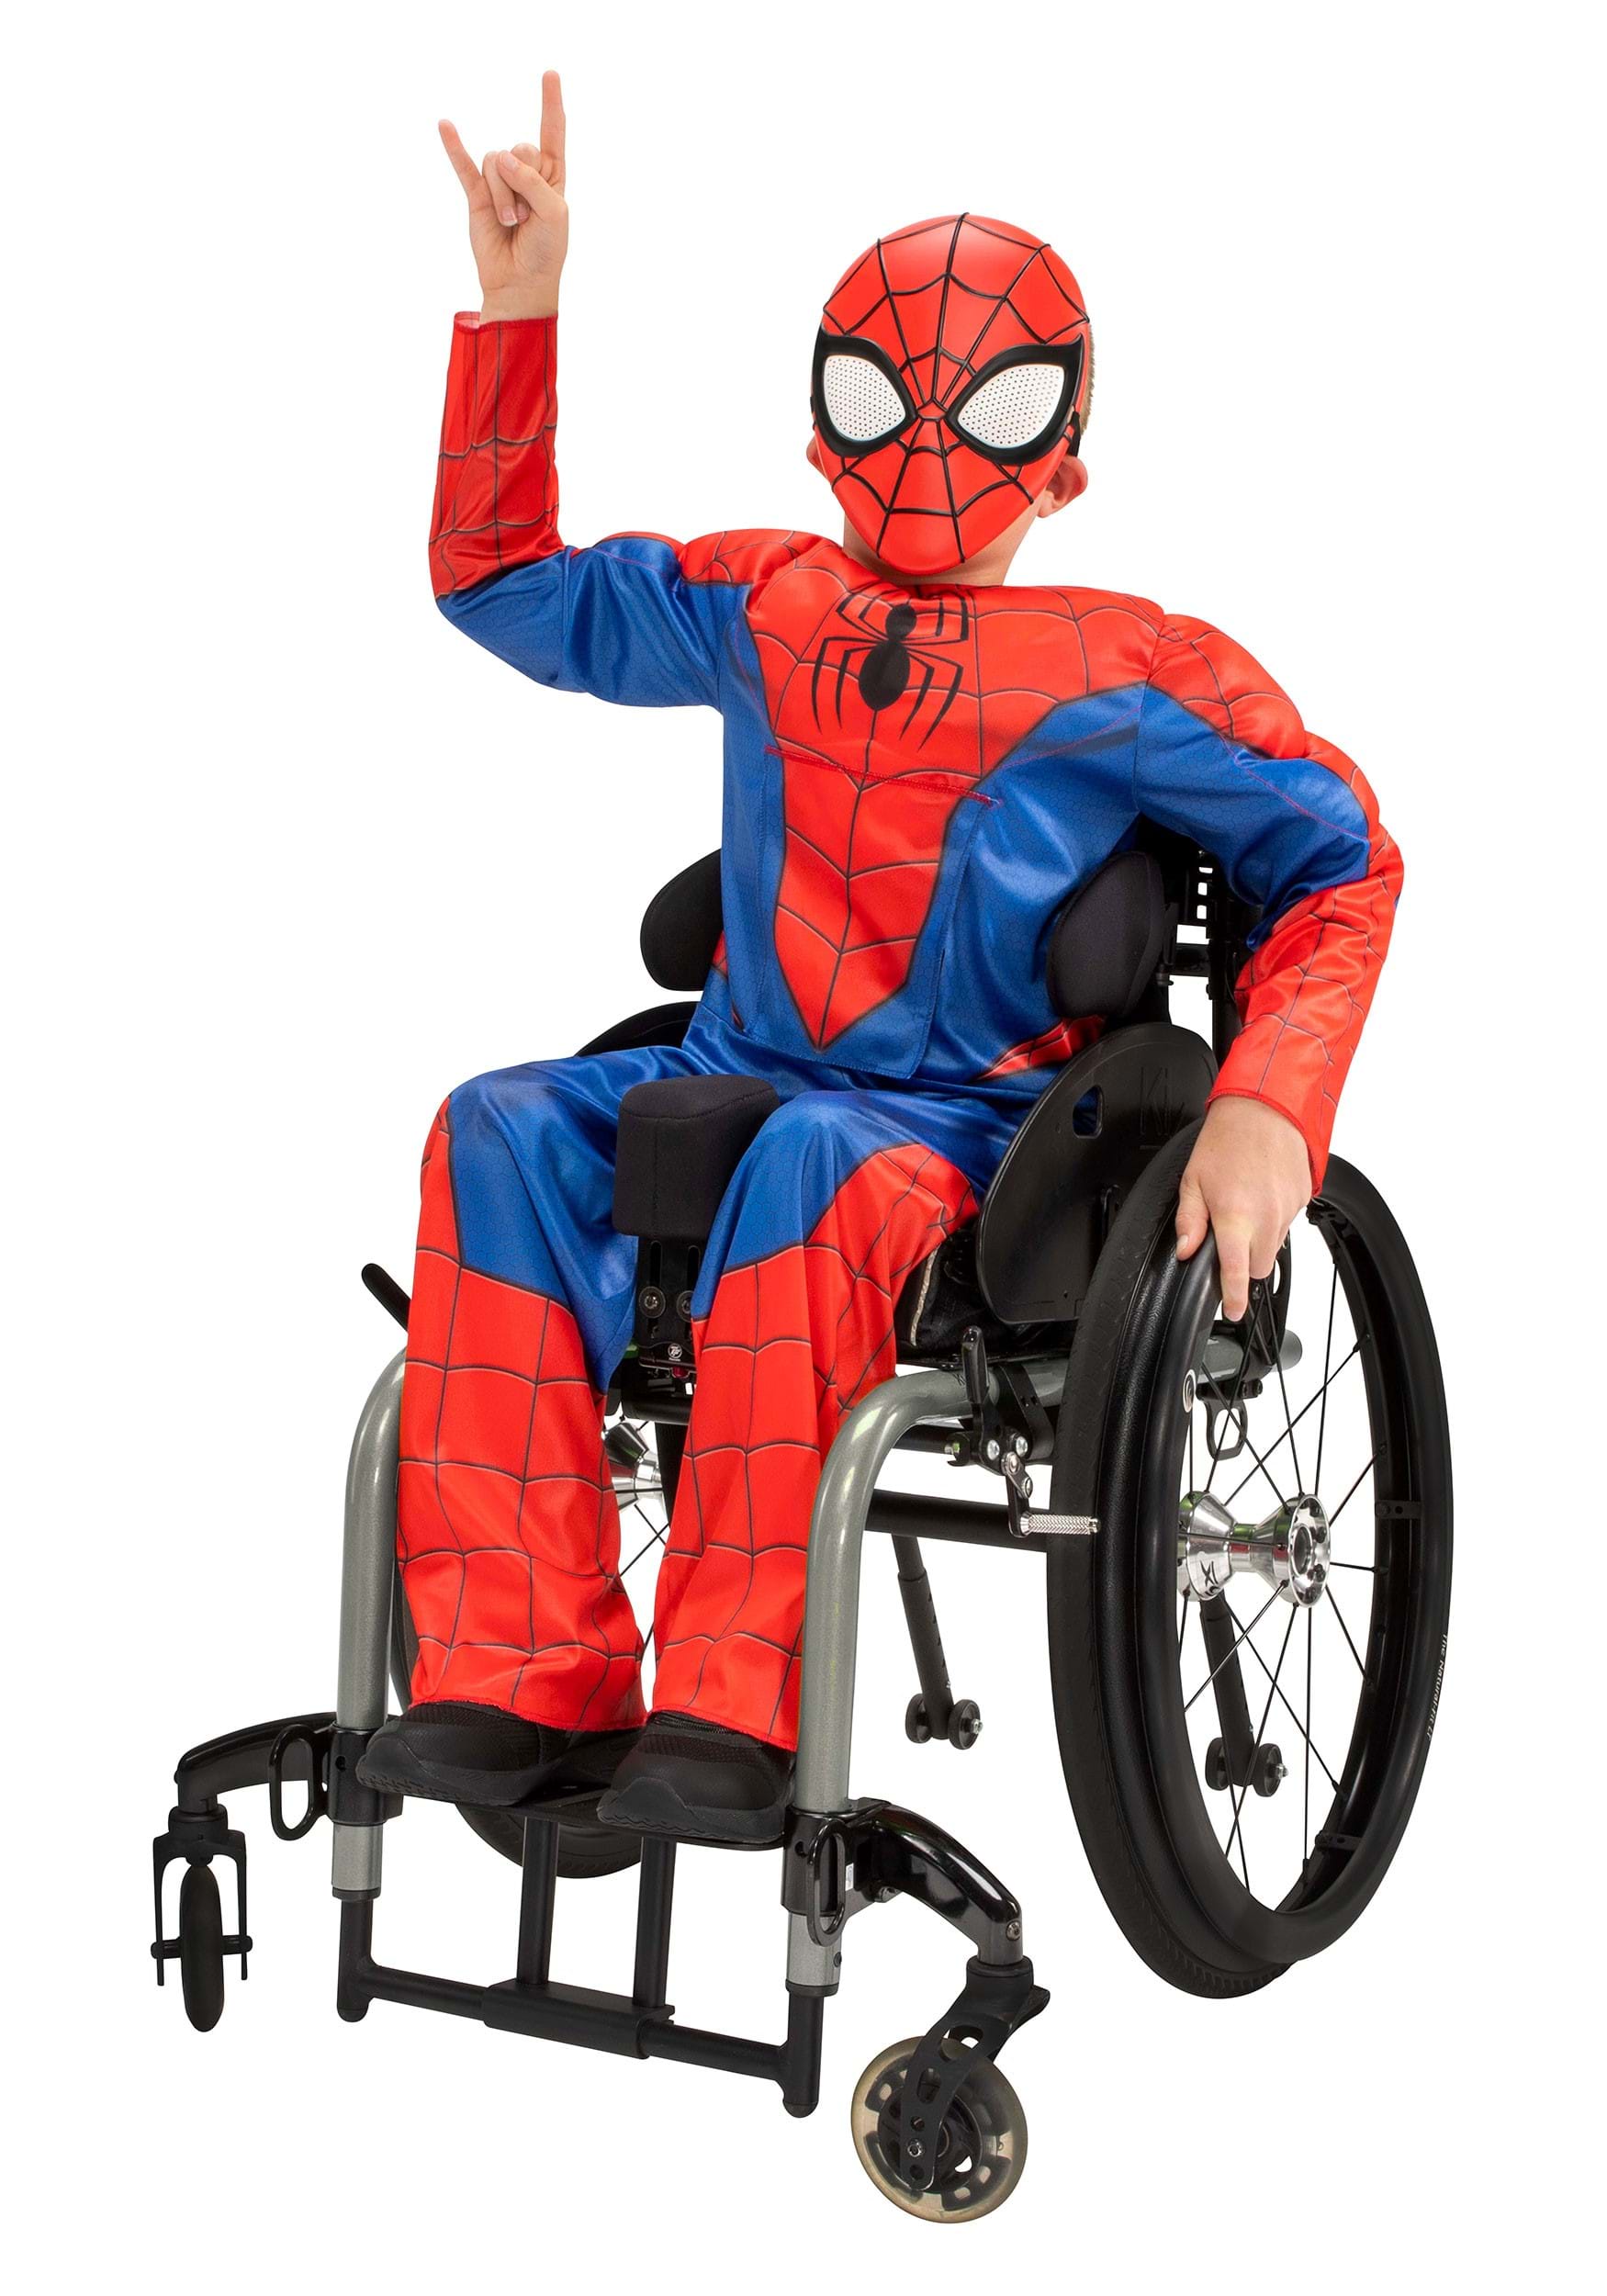 https://images.halloweencostumes.com/products/91910/1-1/child-adaptive-spiderman-costume.jpg